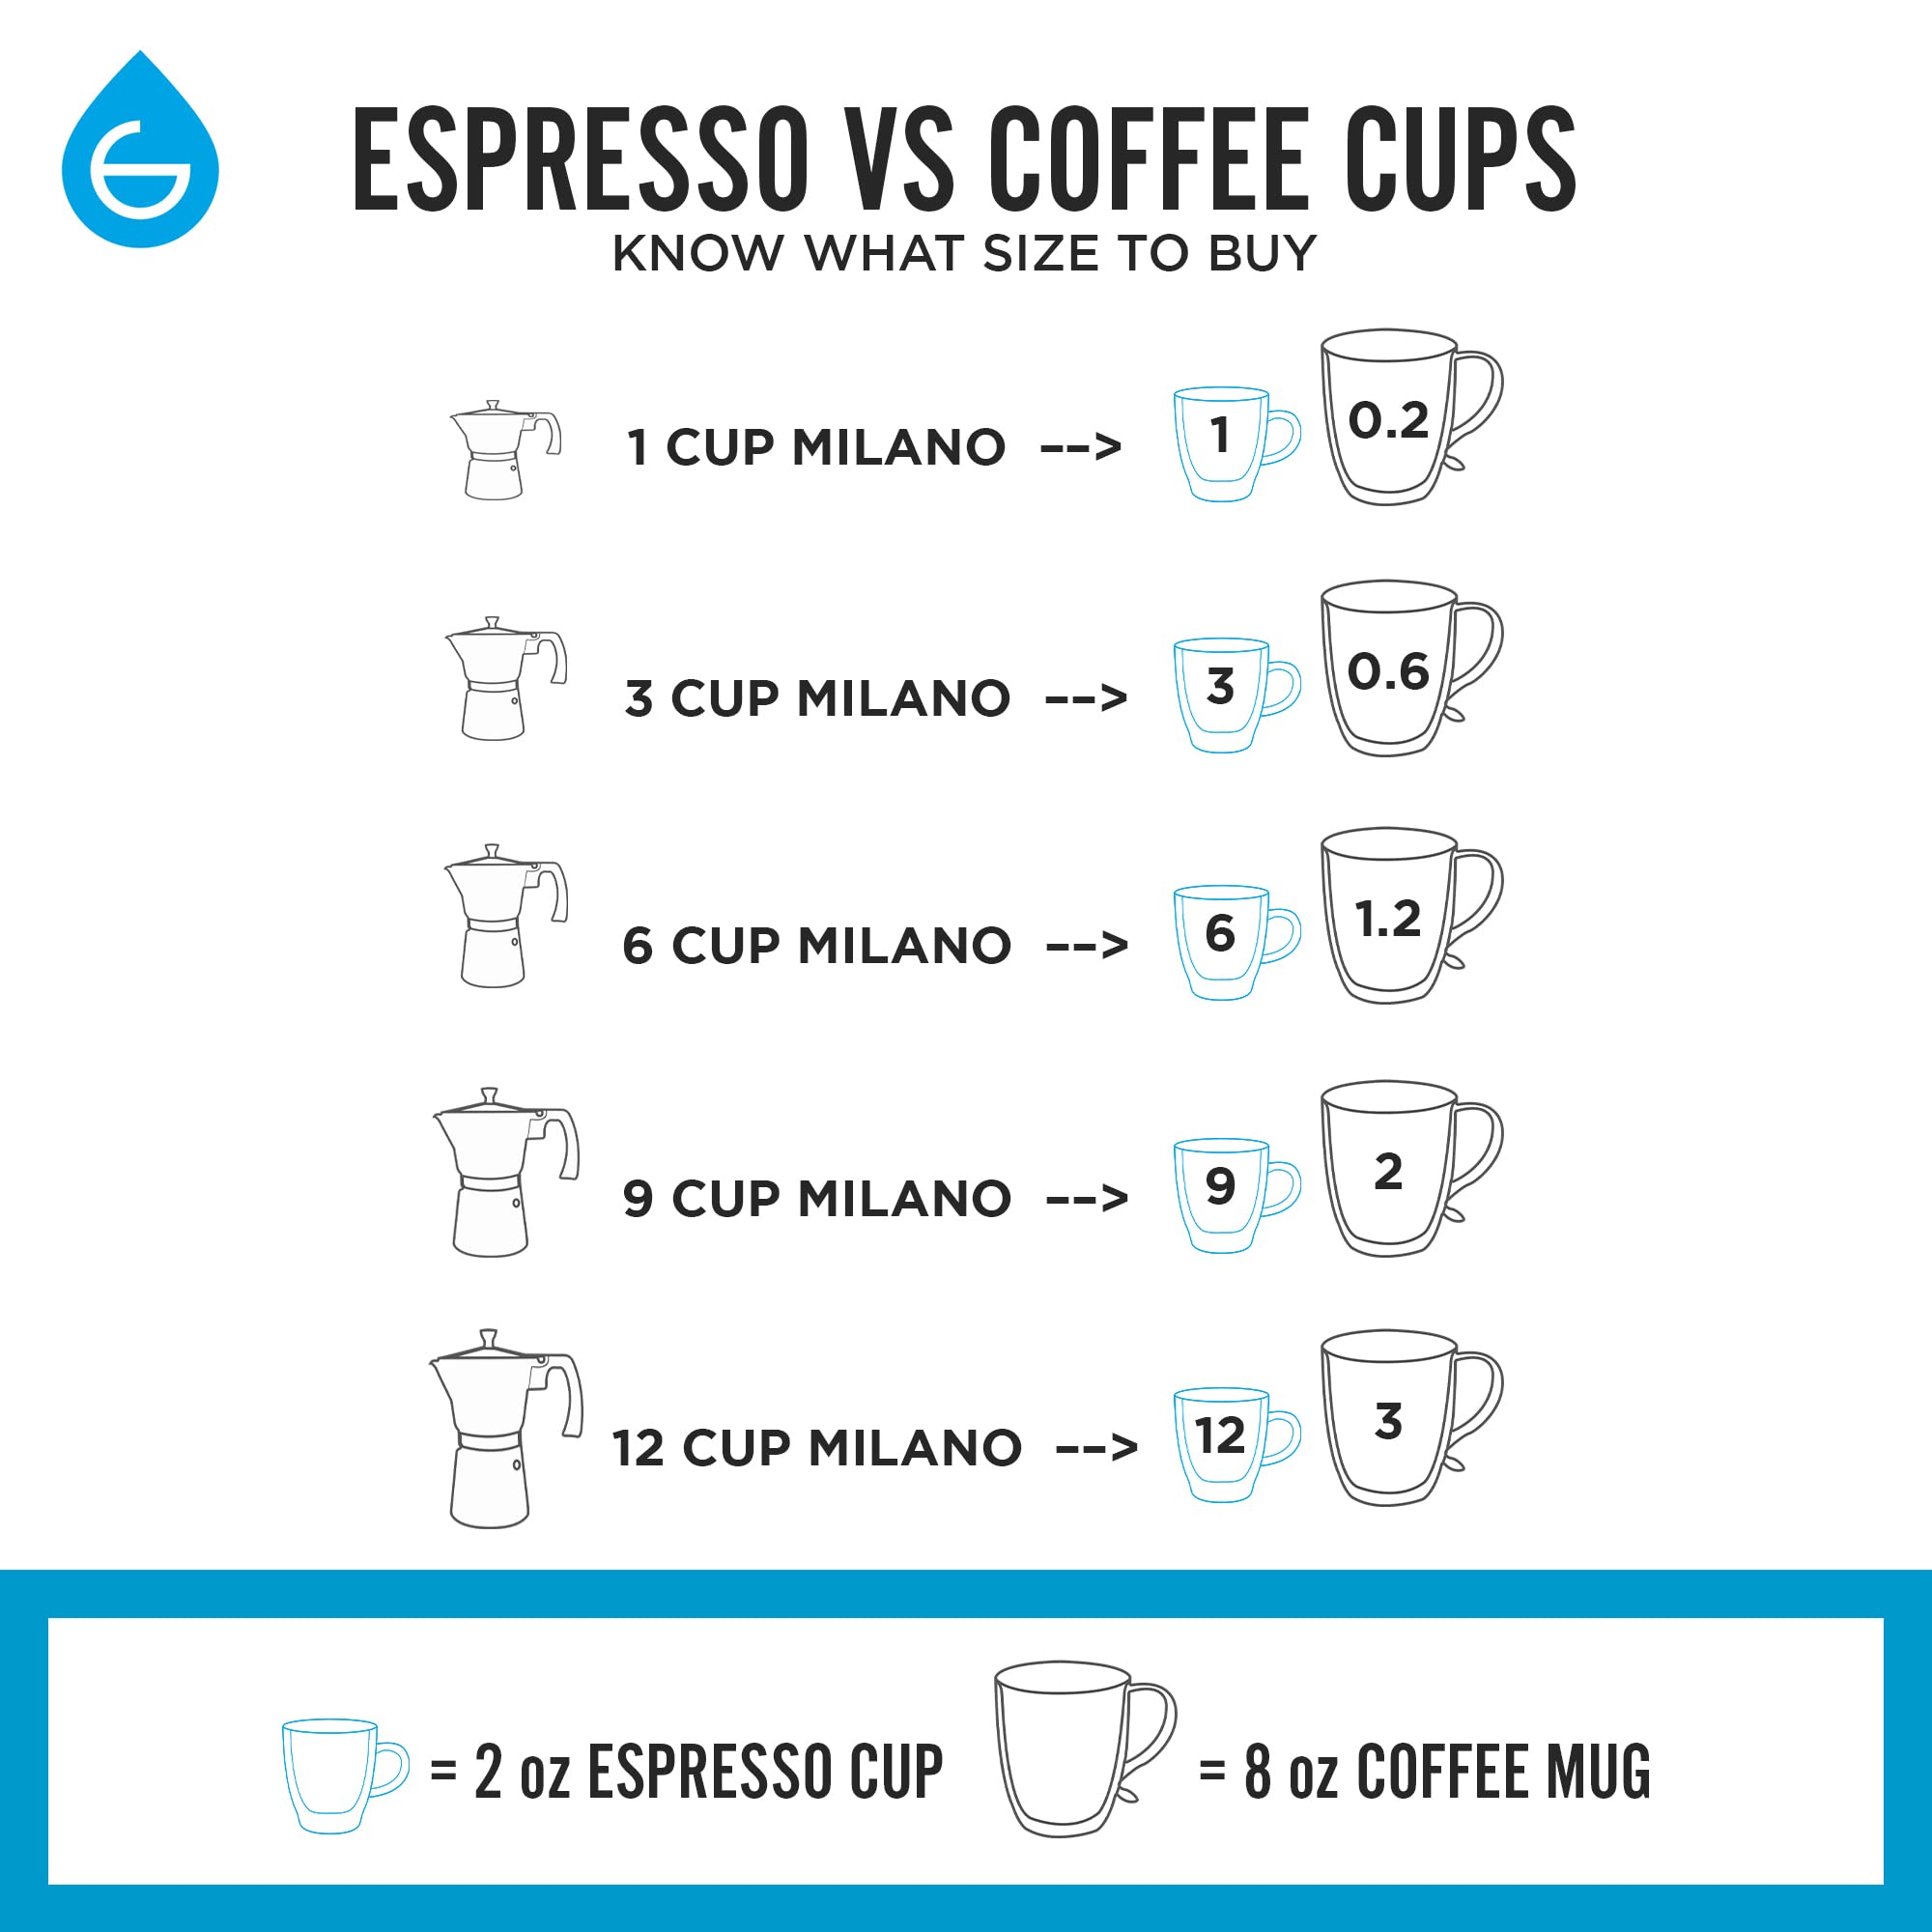 gROScHE Milano Moka pot, Stovetop Espresso maker, greca coffee Maker, Stovetop coffee maker and espresso maker percolator (grey,